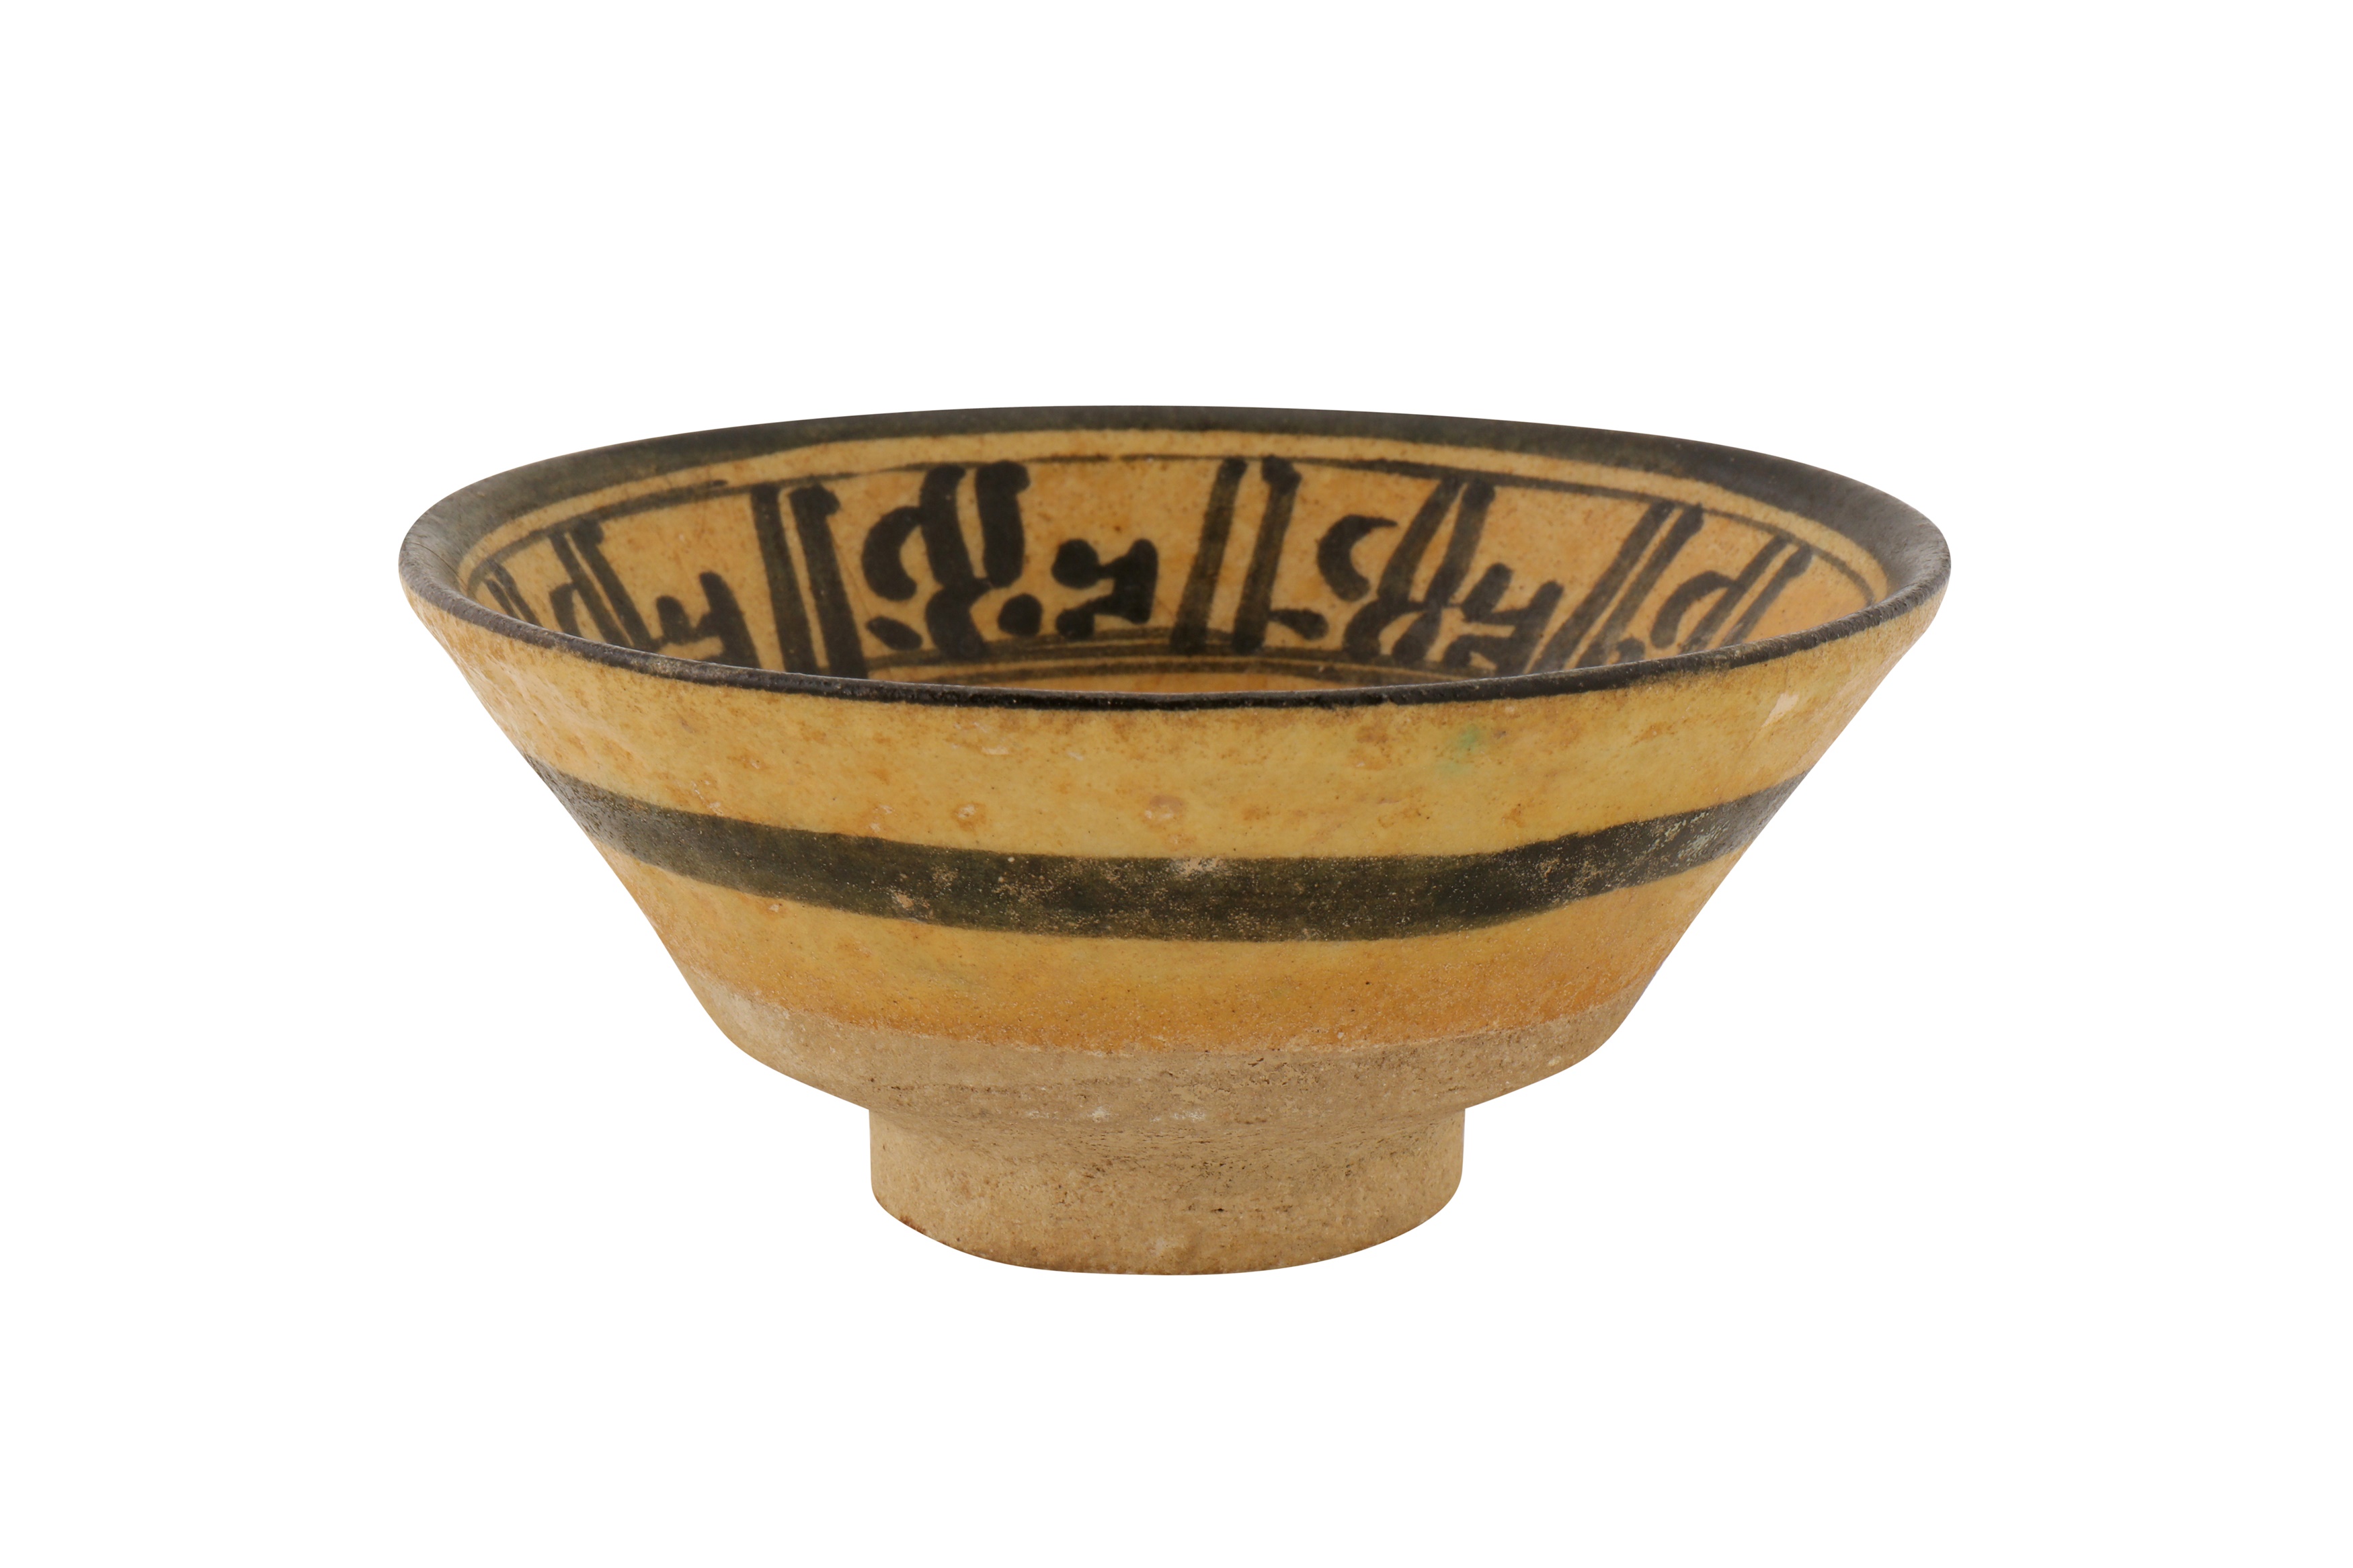 A 12TH-13TH CENTURY PERSIAN SELJUK GLAZED POTTERY BOWL - Image 3 of 5